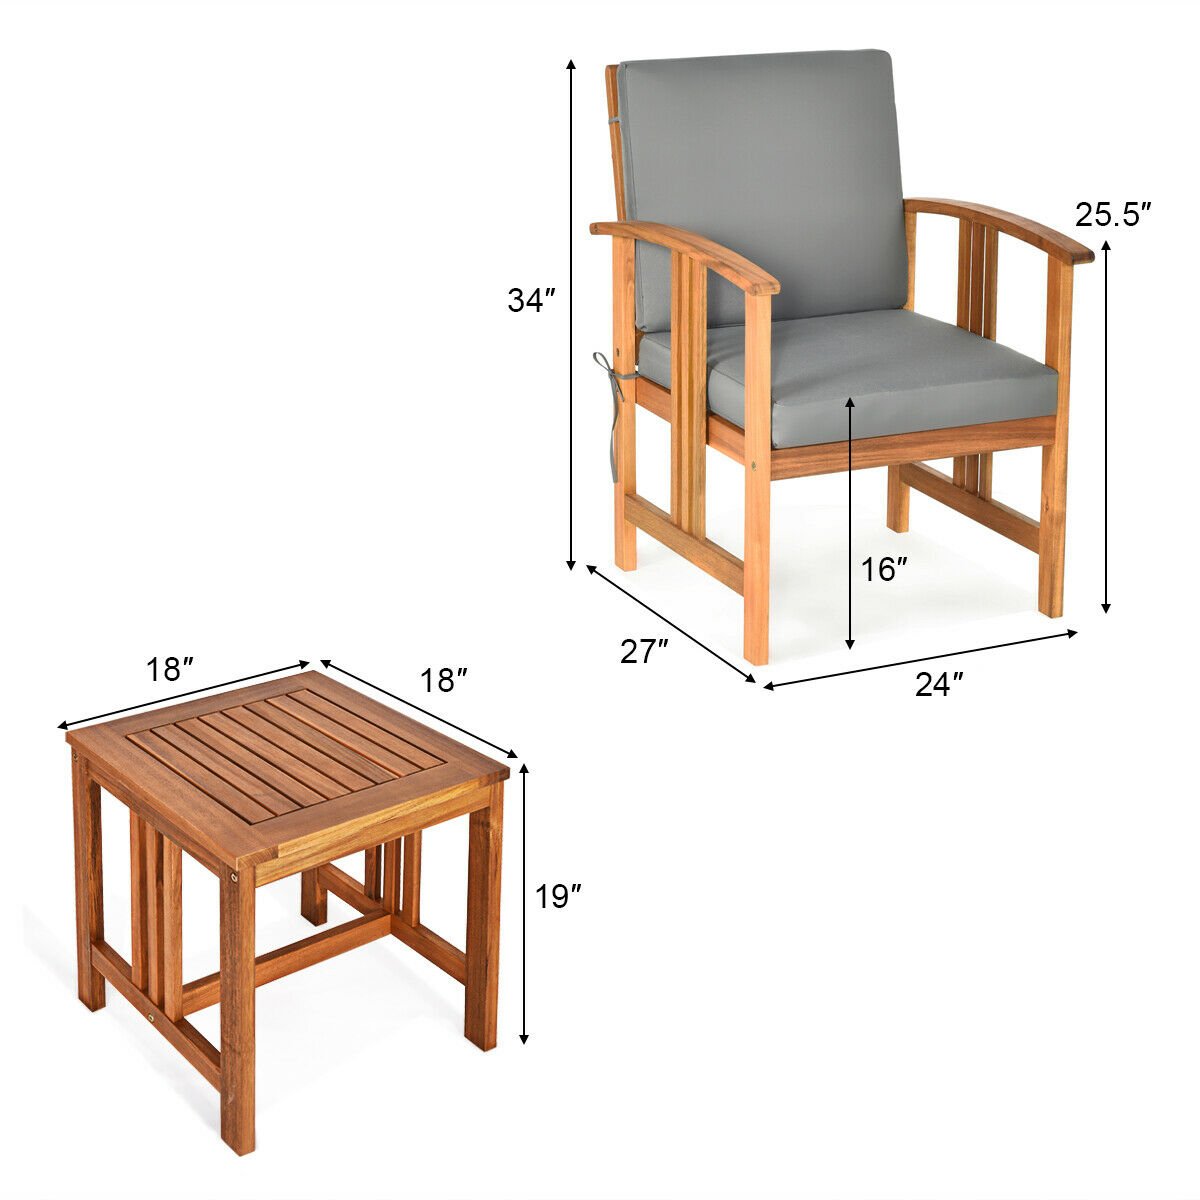 3PCS Outdoor Patio Sofa Furniture Set Solid Wood Cushioned Conversation Set Grey